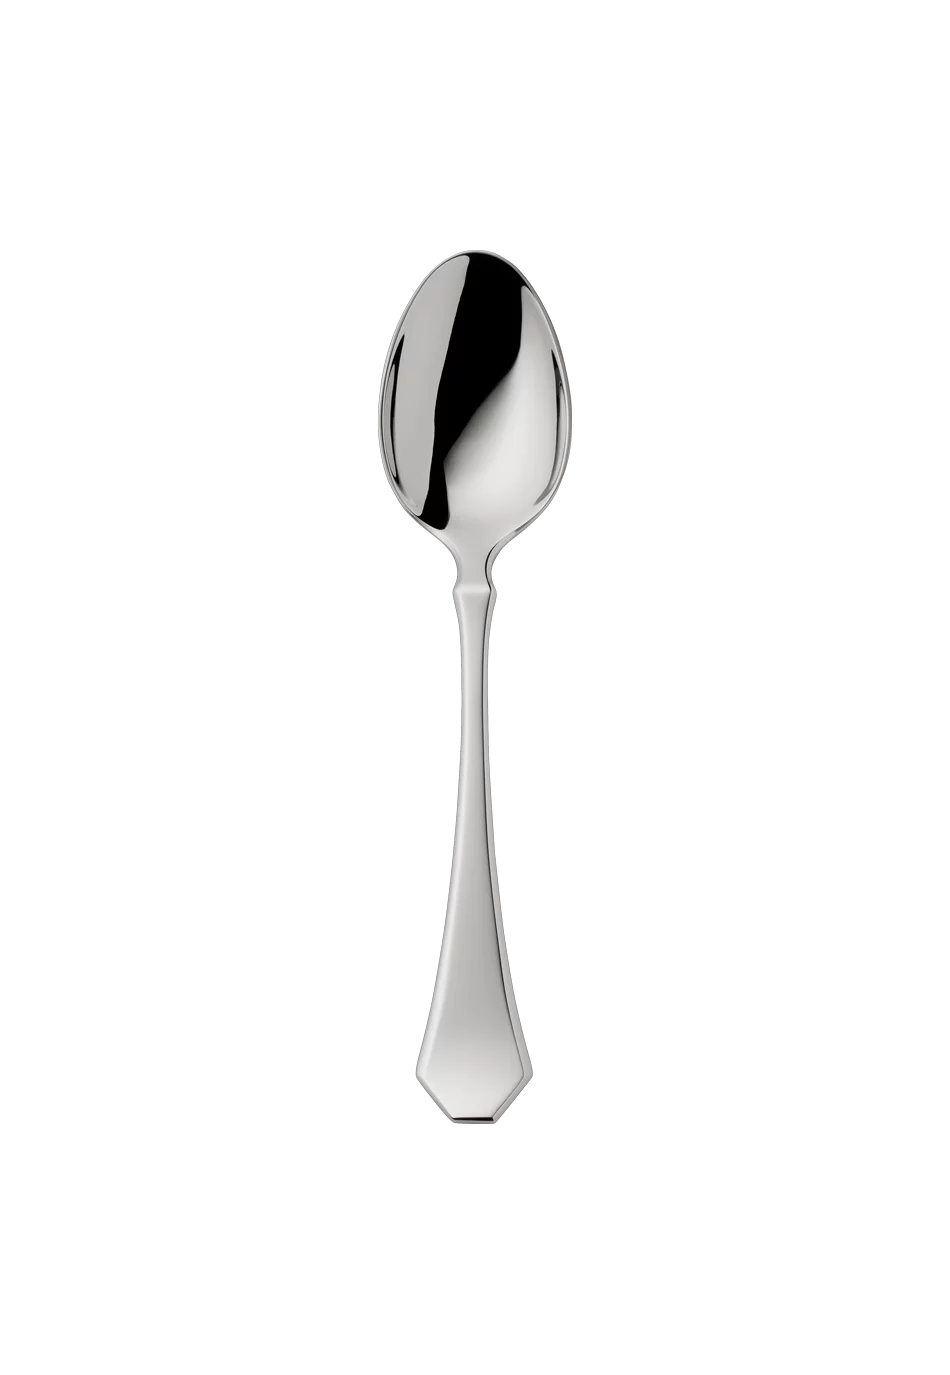 Baltic Dessert Spoon (18/8 stainless steel)